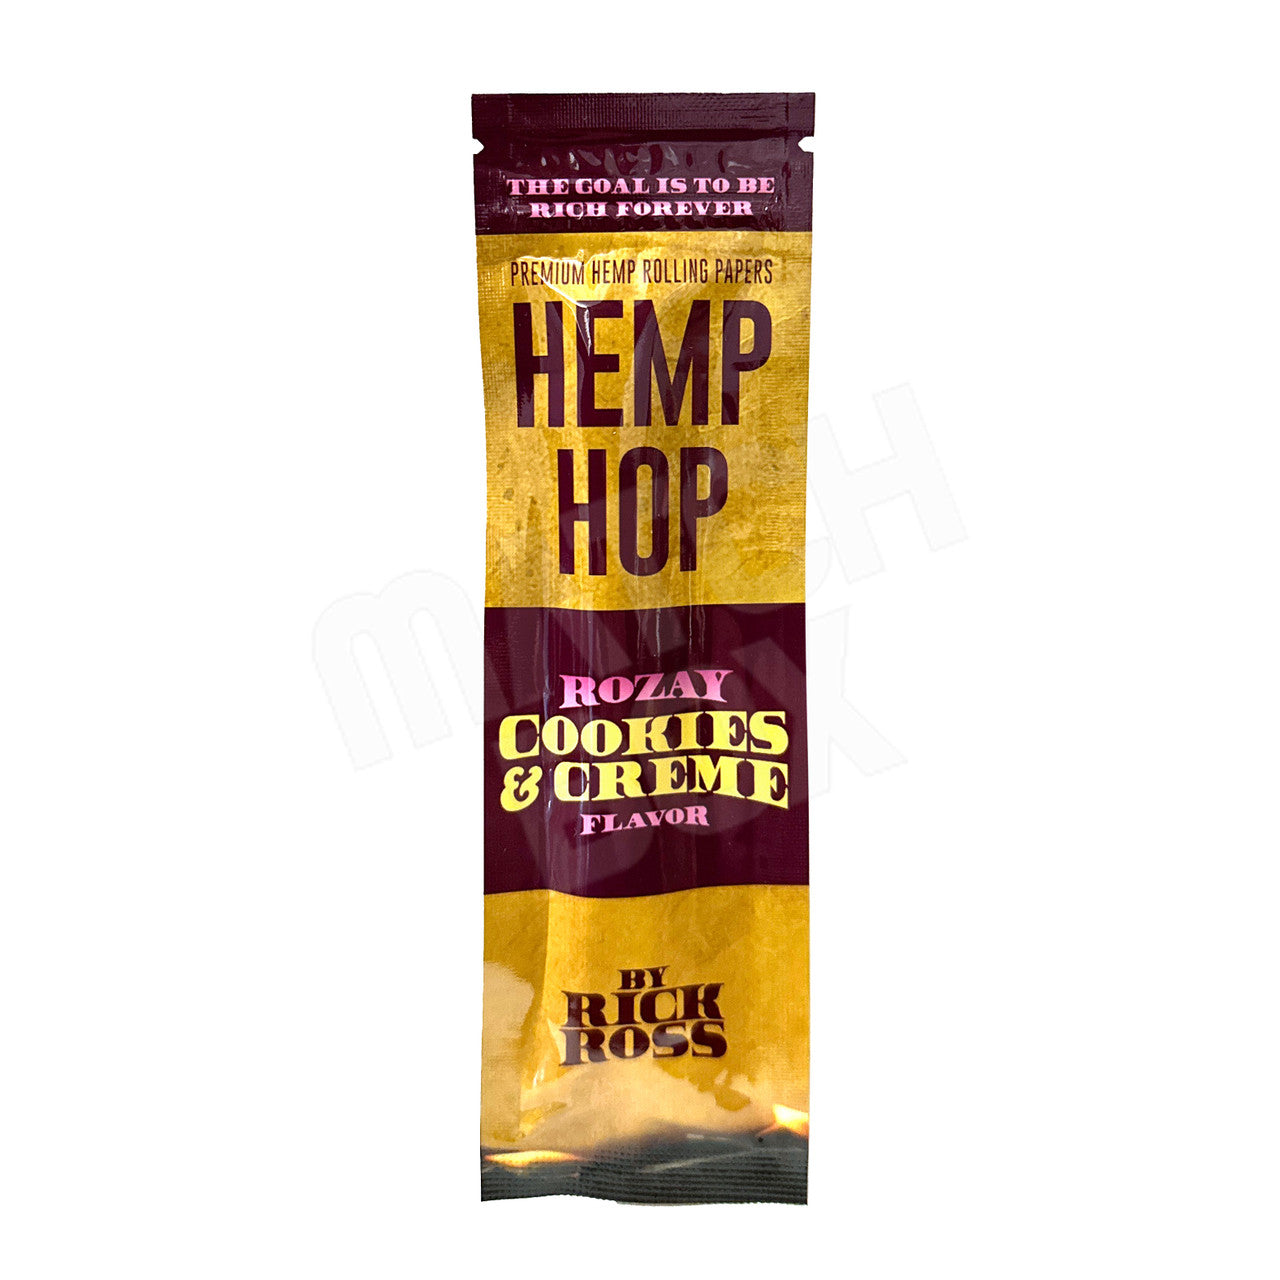 Hemp Hop Cookies & Creme Flavored Hemp Wraps